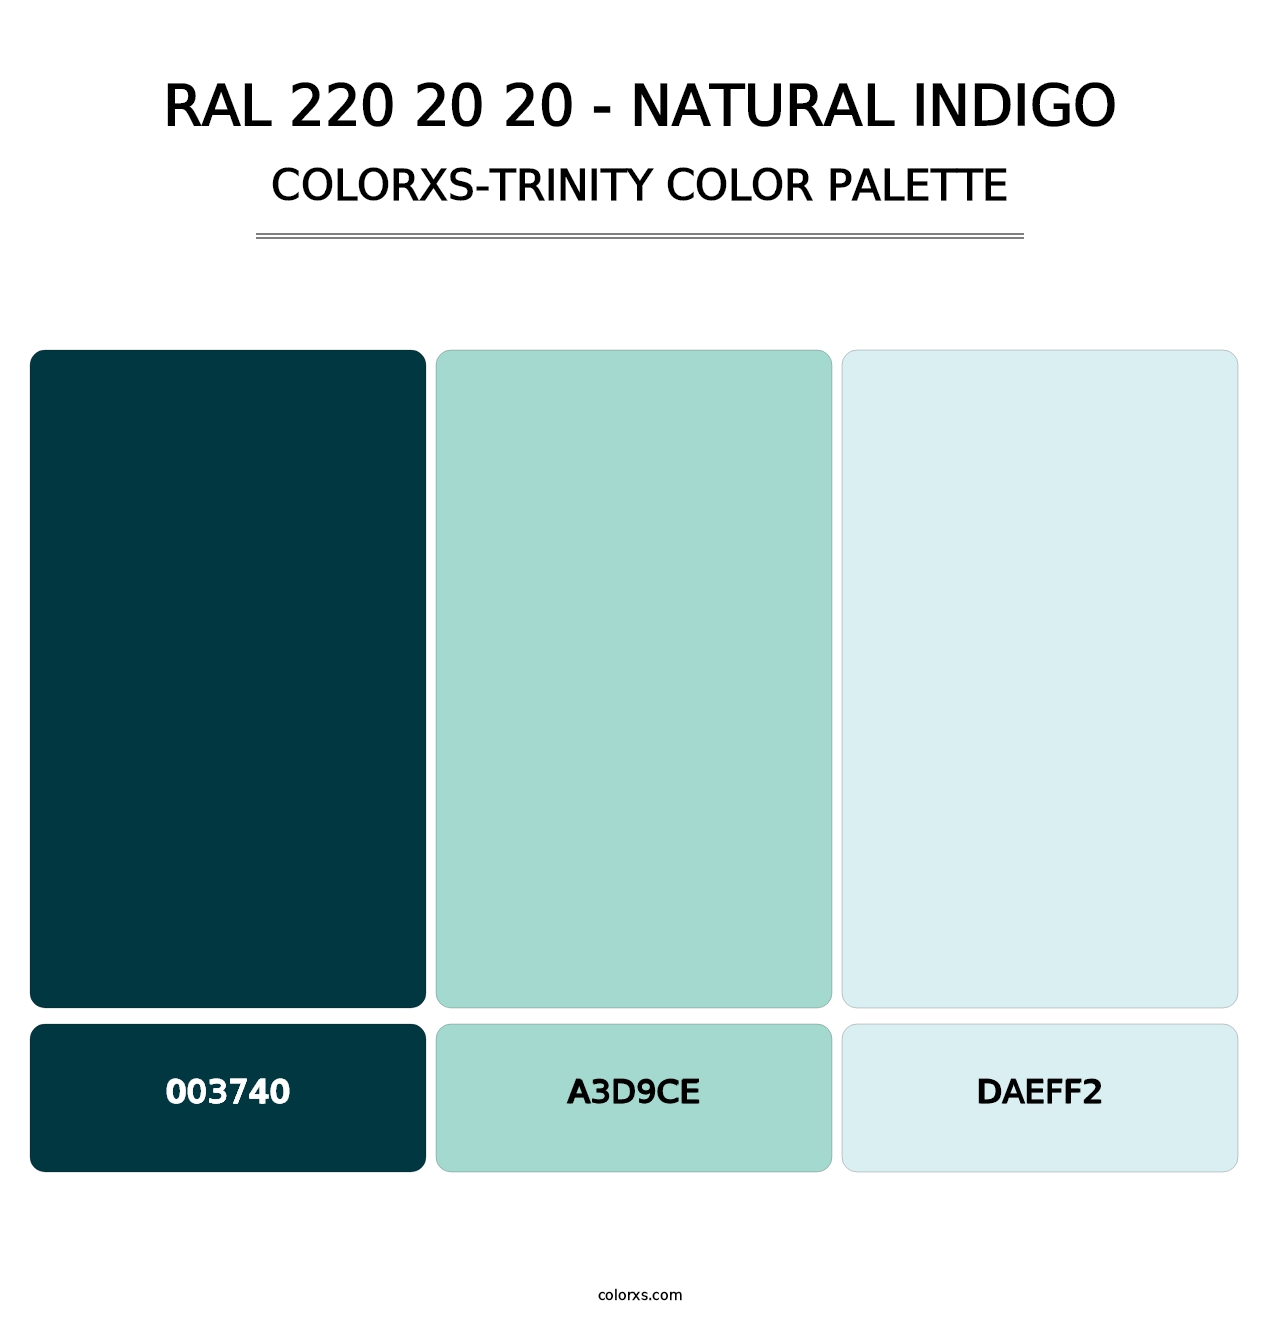 RAL 220 20 20 - Natural Indigo - Colorxs Trinity Palette